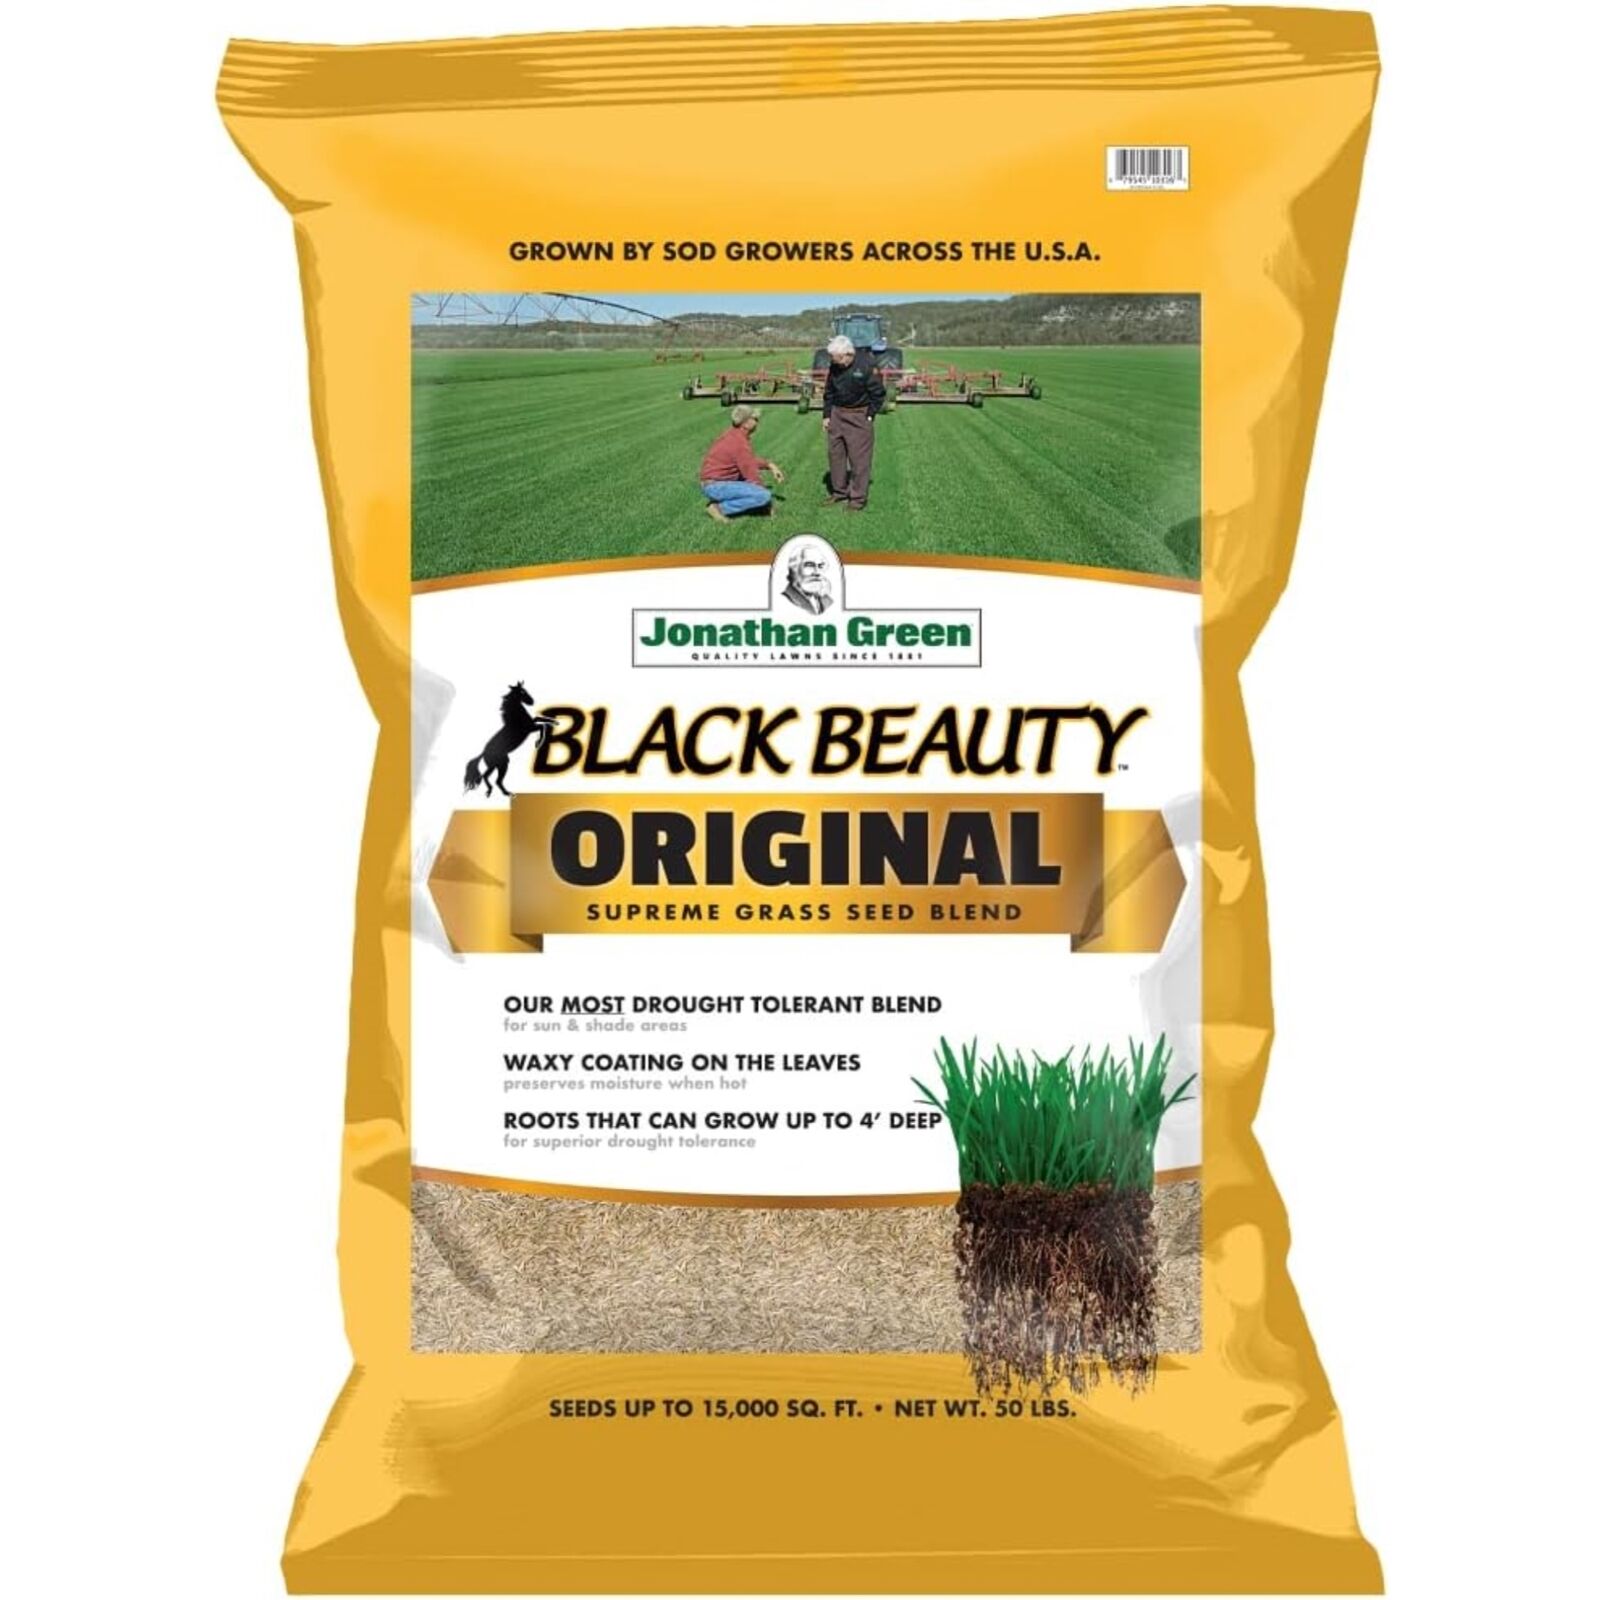 Jonathan Green Black Beauty Original Supreme Grass Seed Blend, 50lb